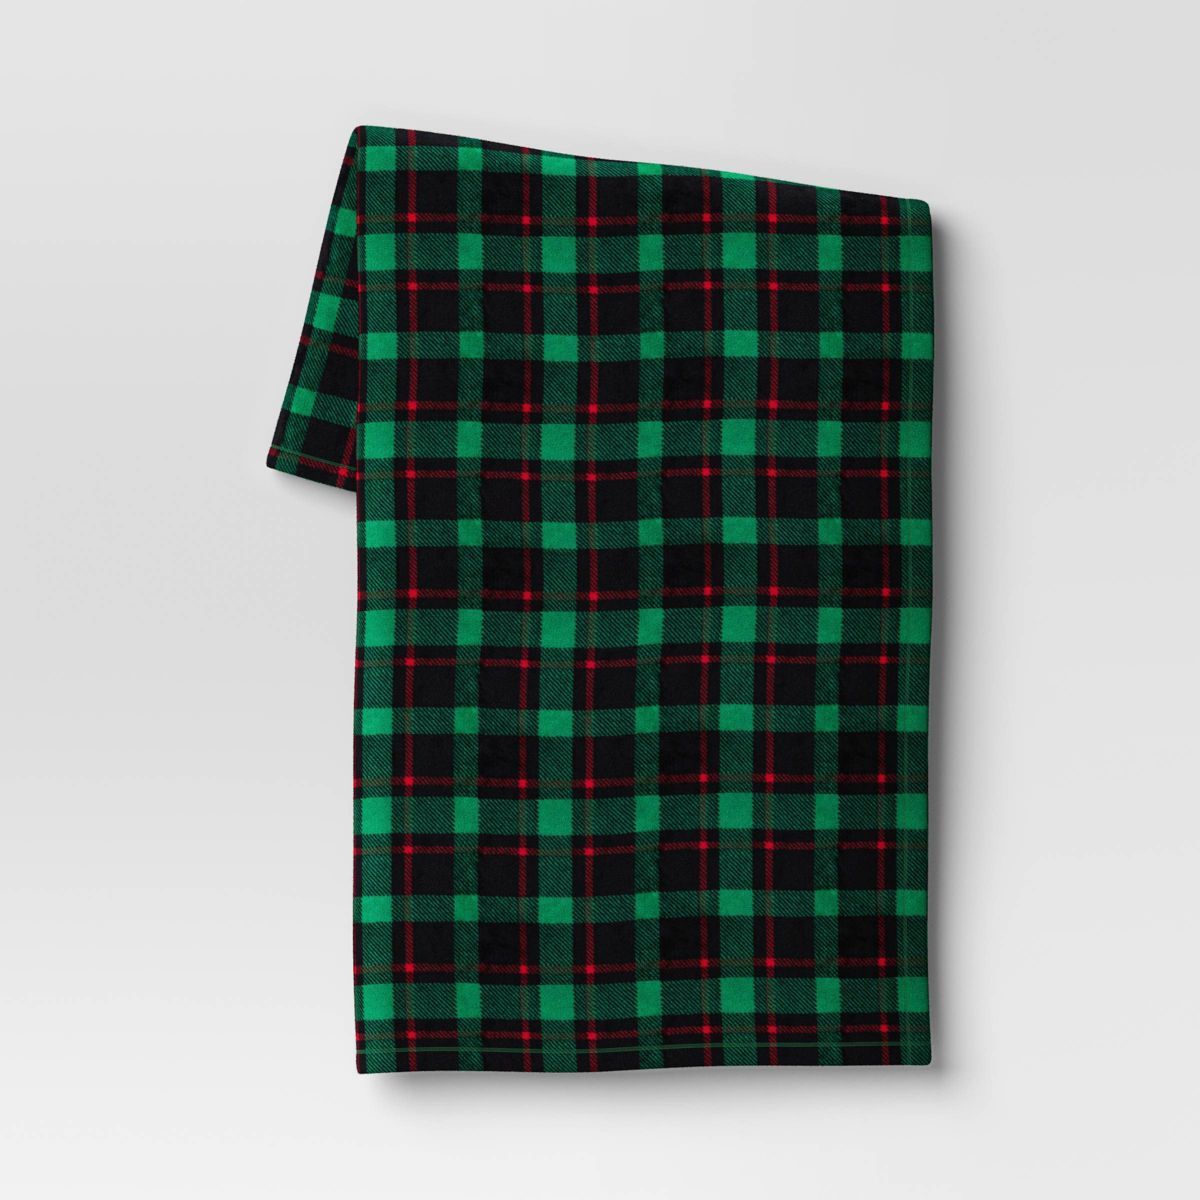 Plaid Plush Knit Christmas Throw Blanket Green/Black/Red - Wondershop™ | Target